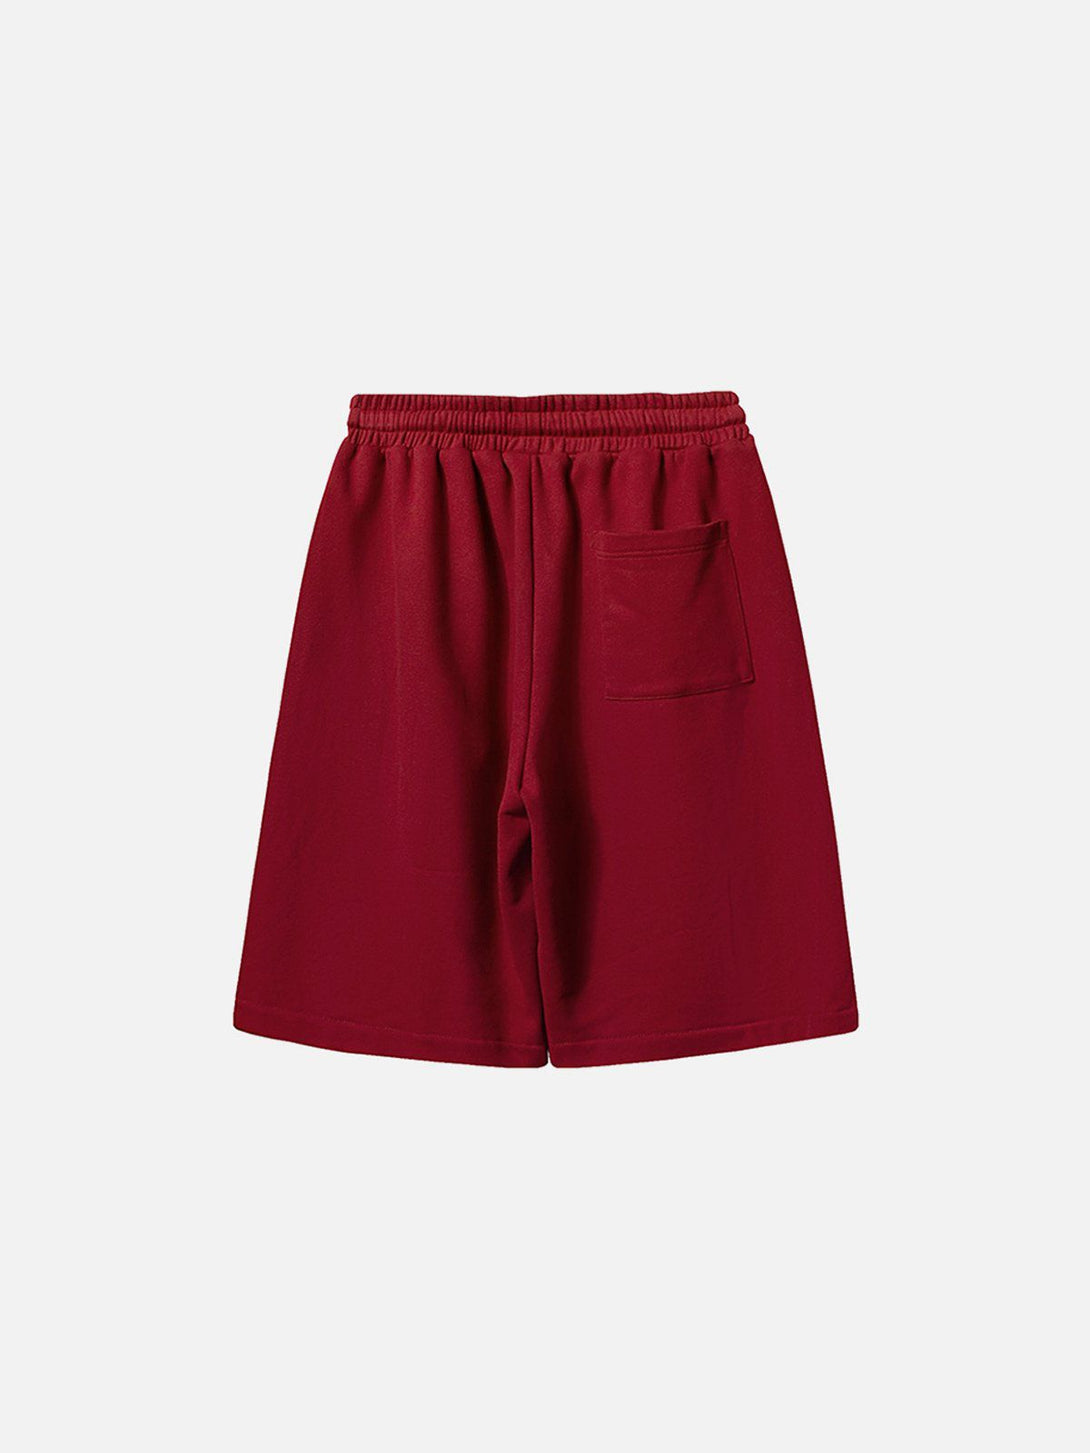 Levefly - Ribbon Stripe Print Shorts - Streetwear Fashion - levefly.com